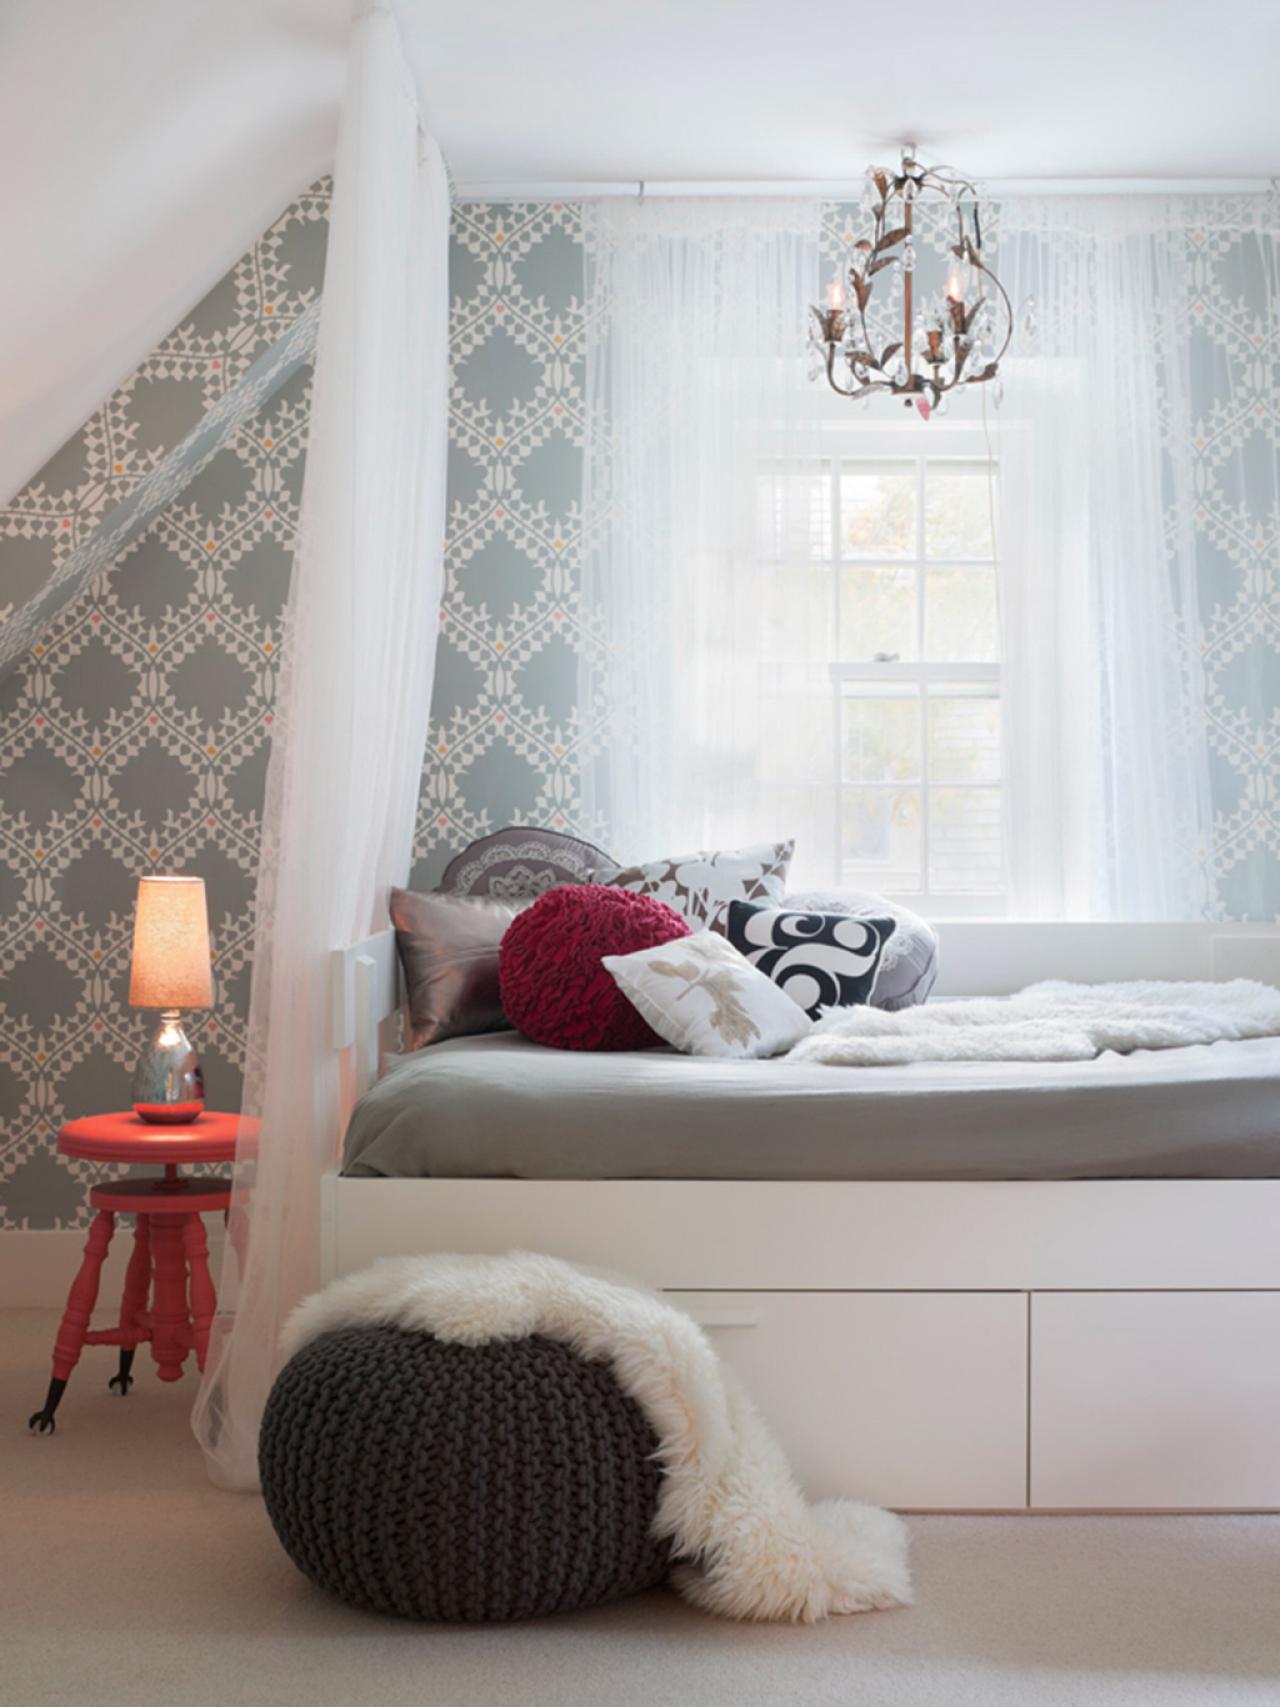 Sophisticated Teen Bedroom Decorating Ideas | HGTV's ...